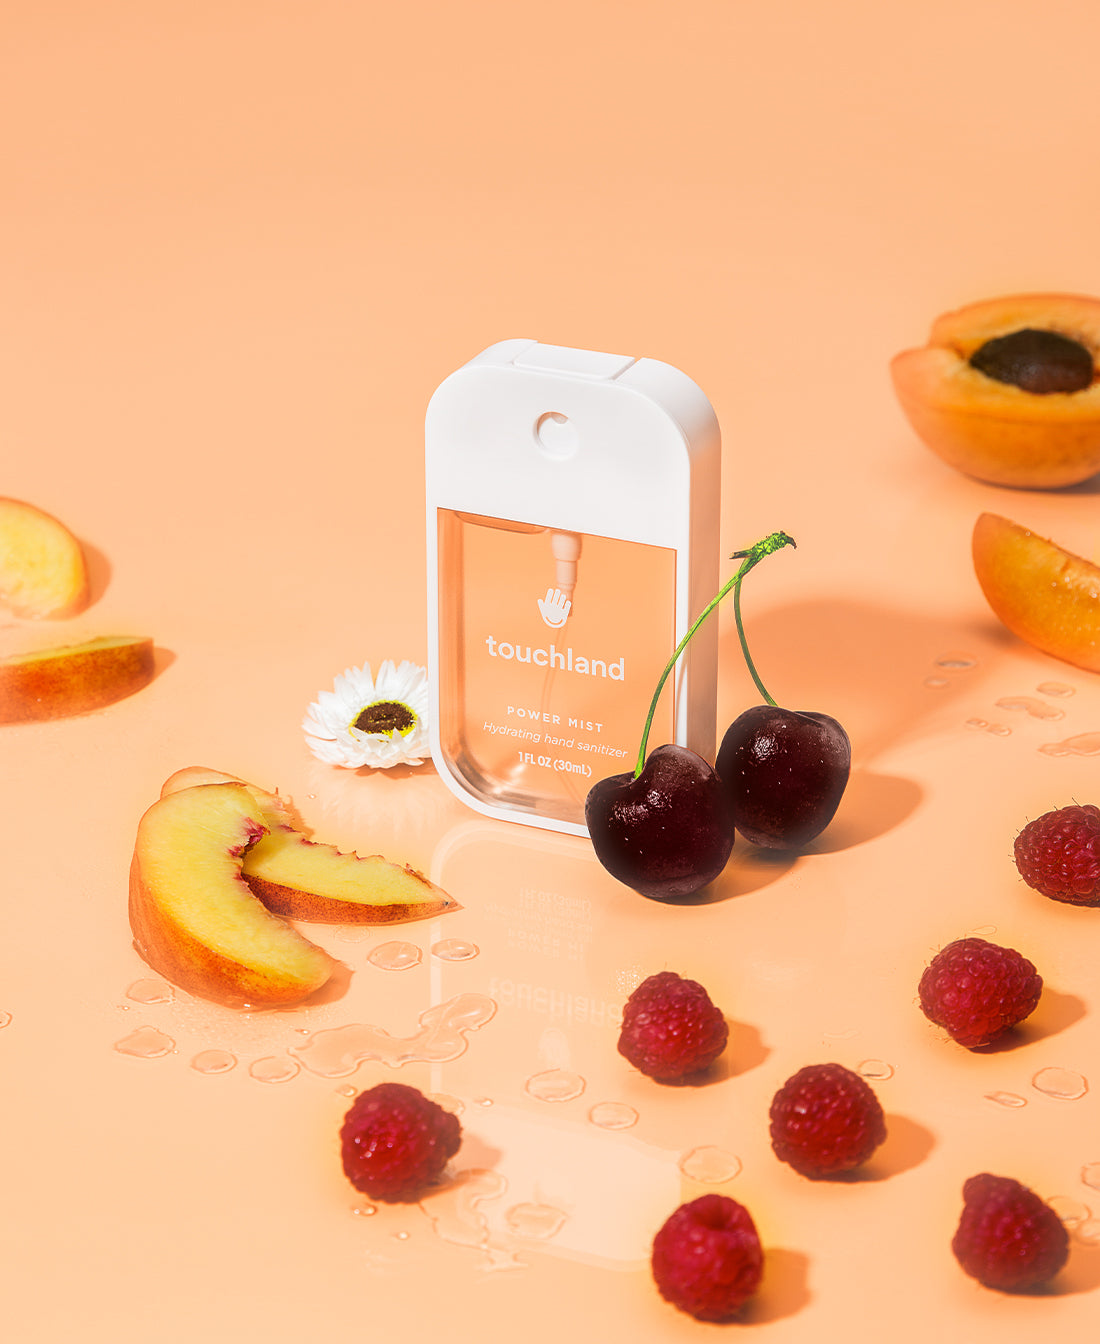 Touchland velvet peach orange power mist with fruits on an orange background